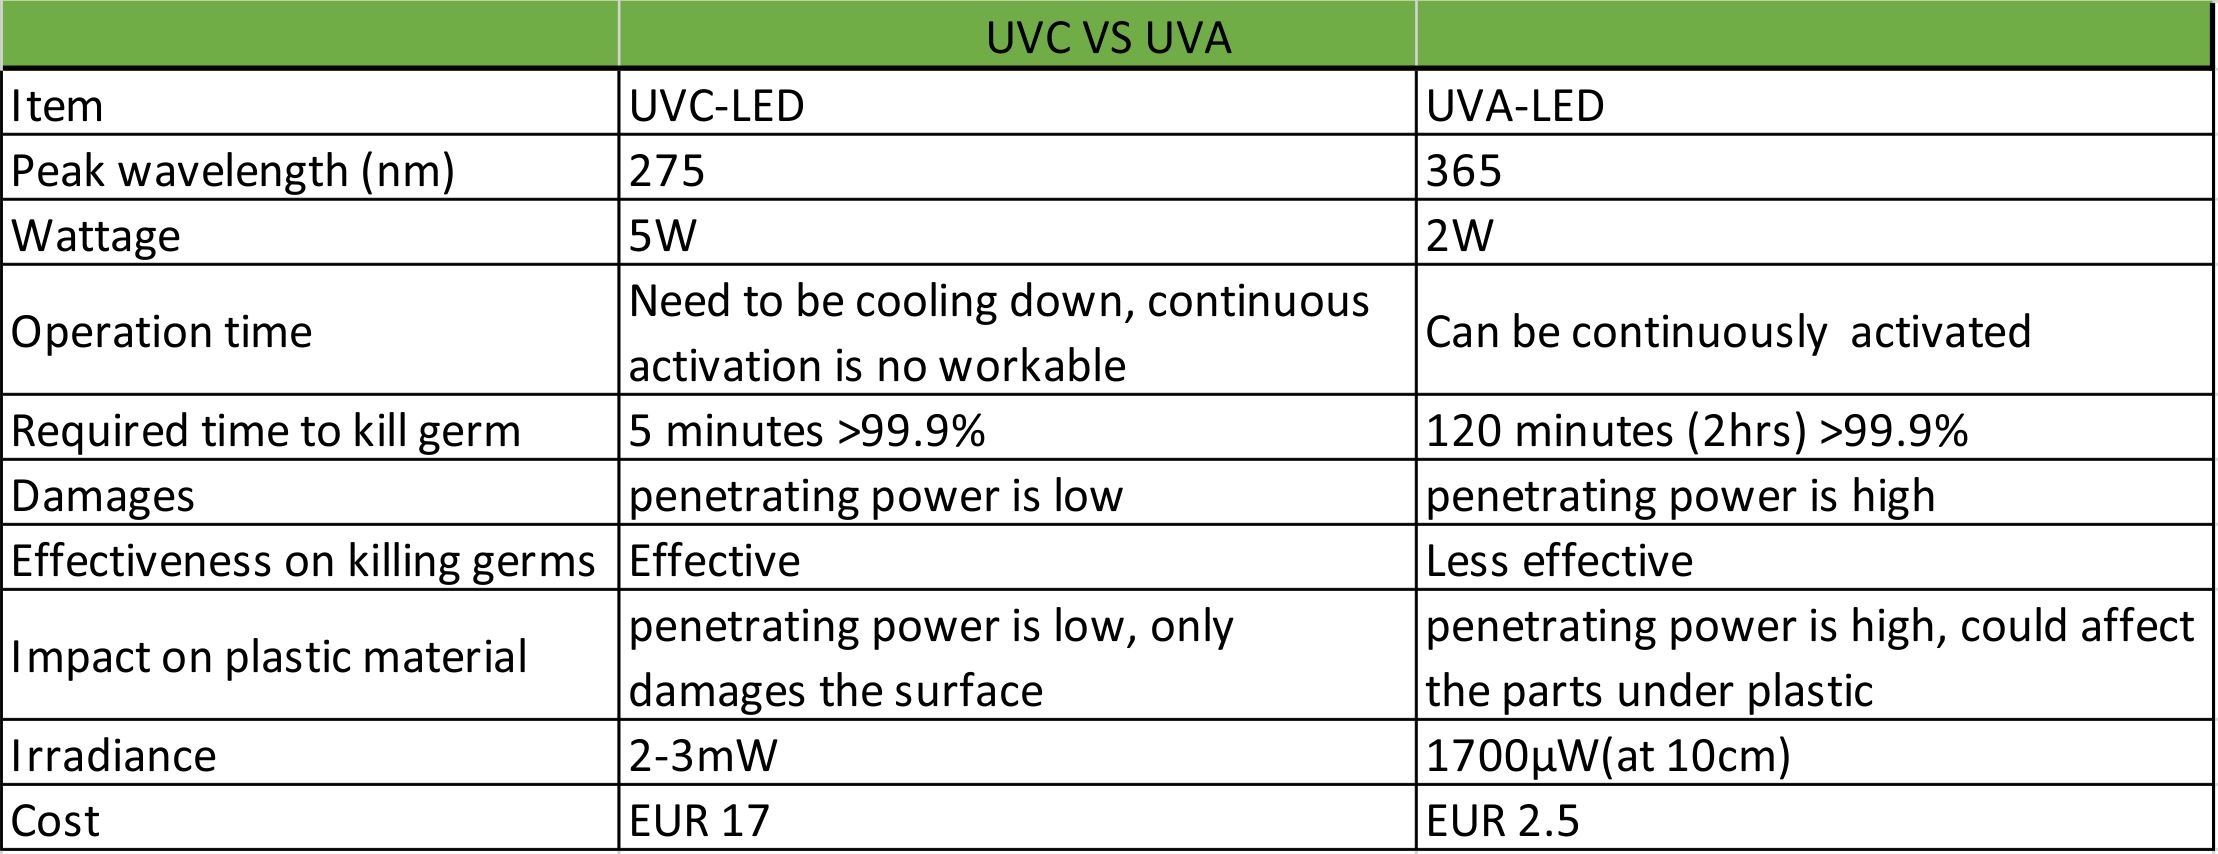 Comparison of UVC and UVA LED lights